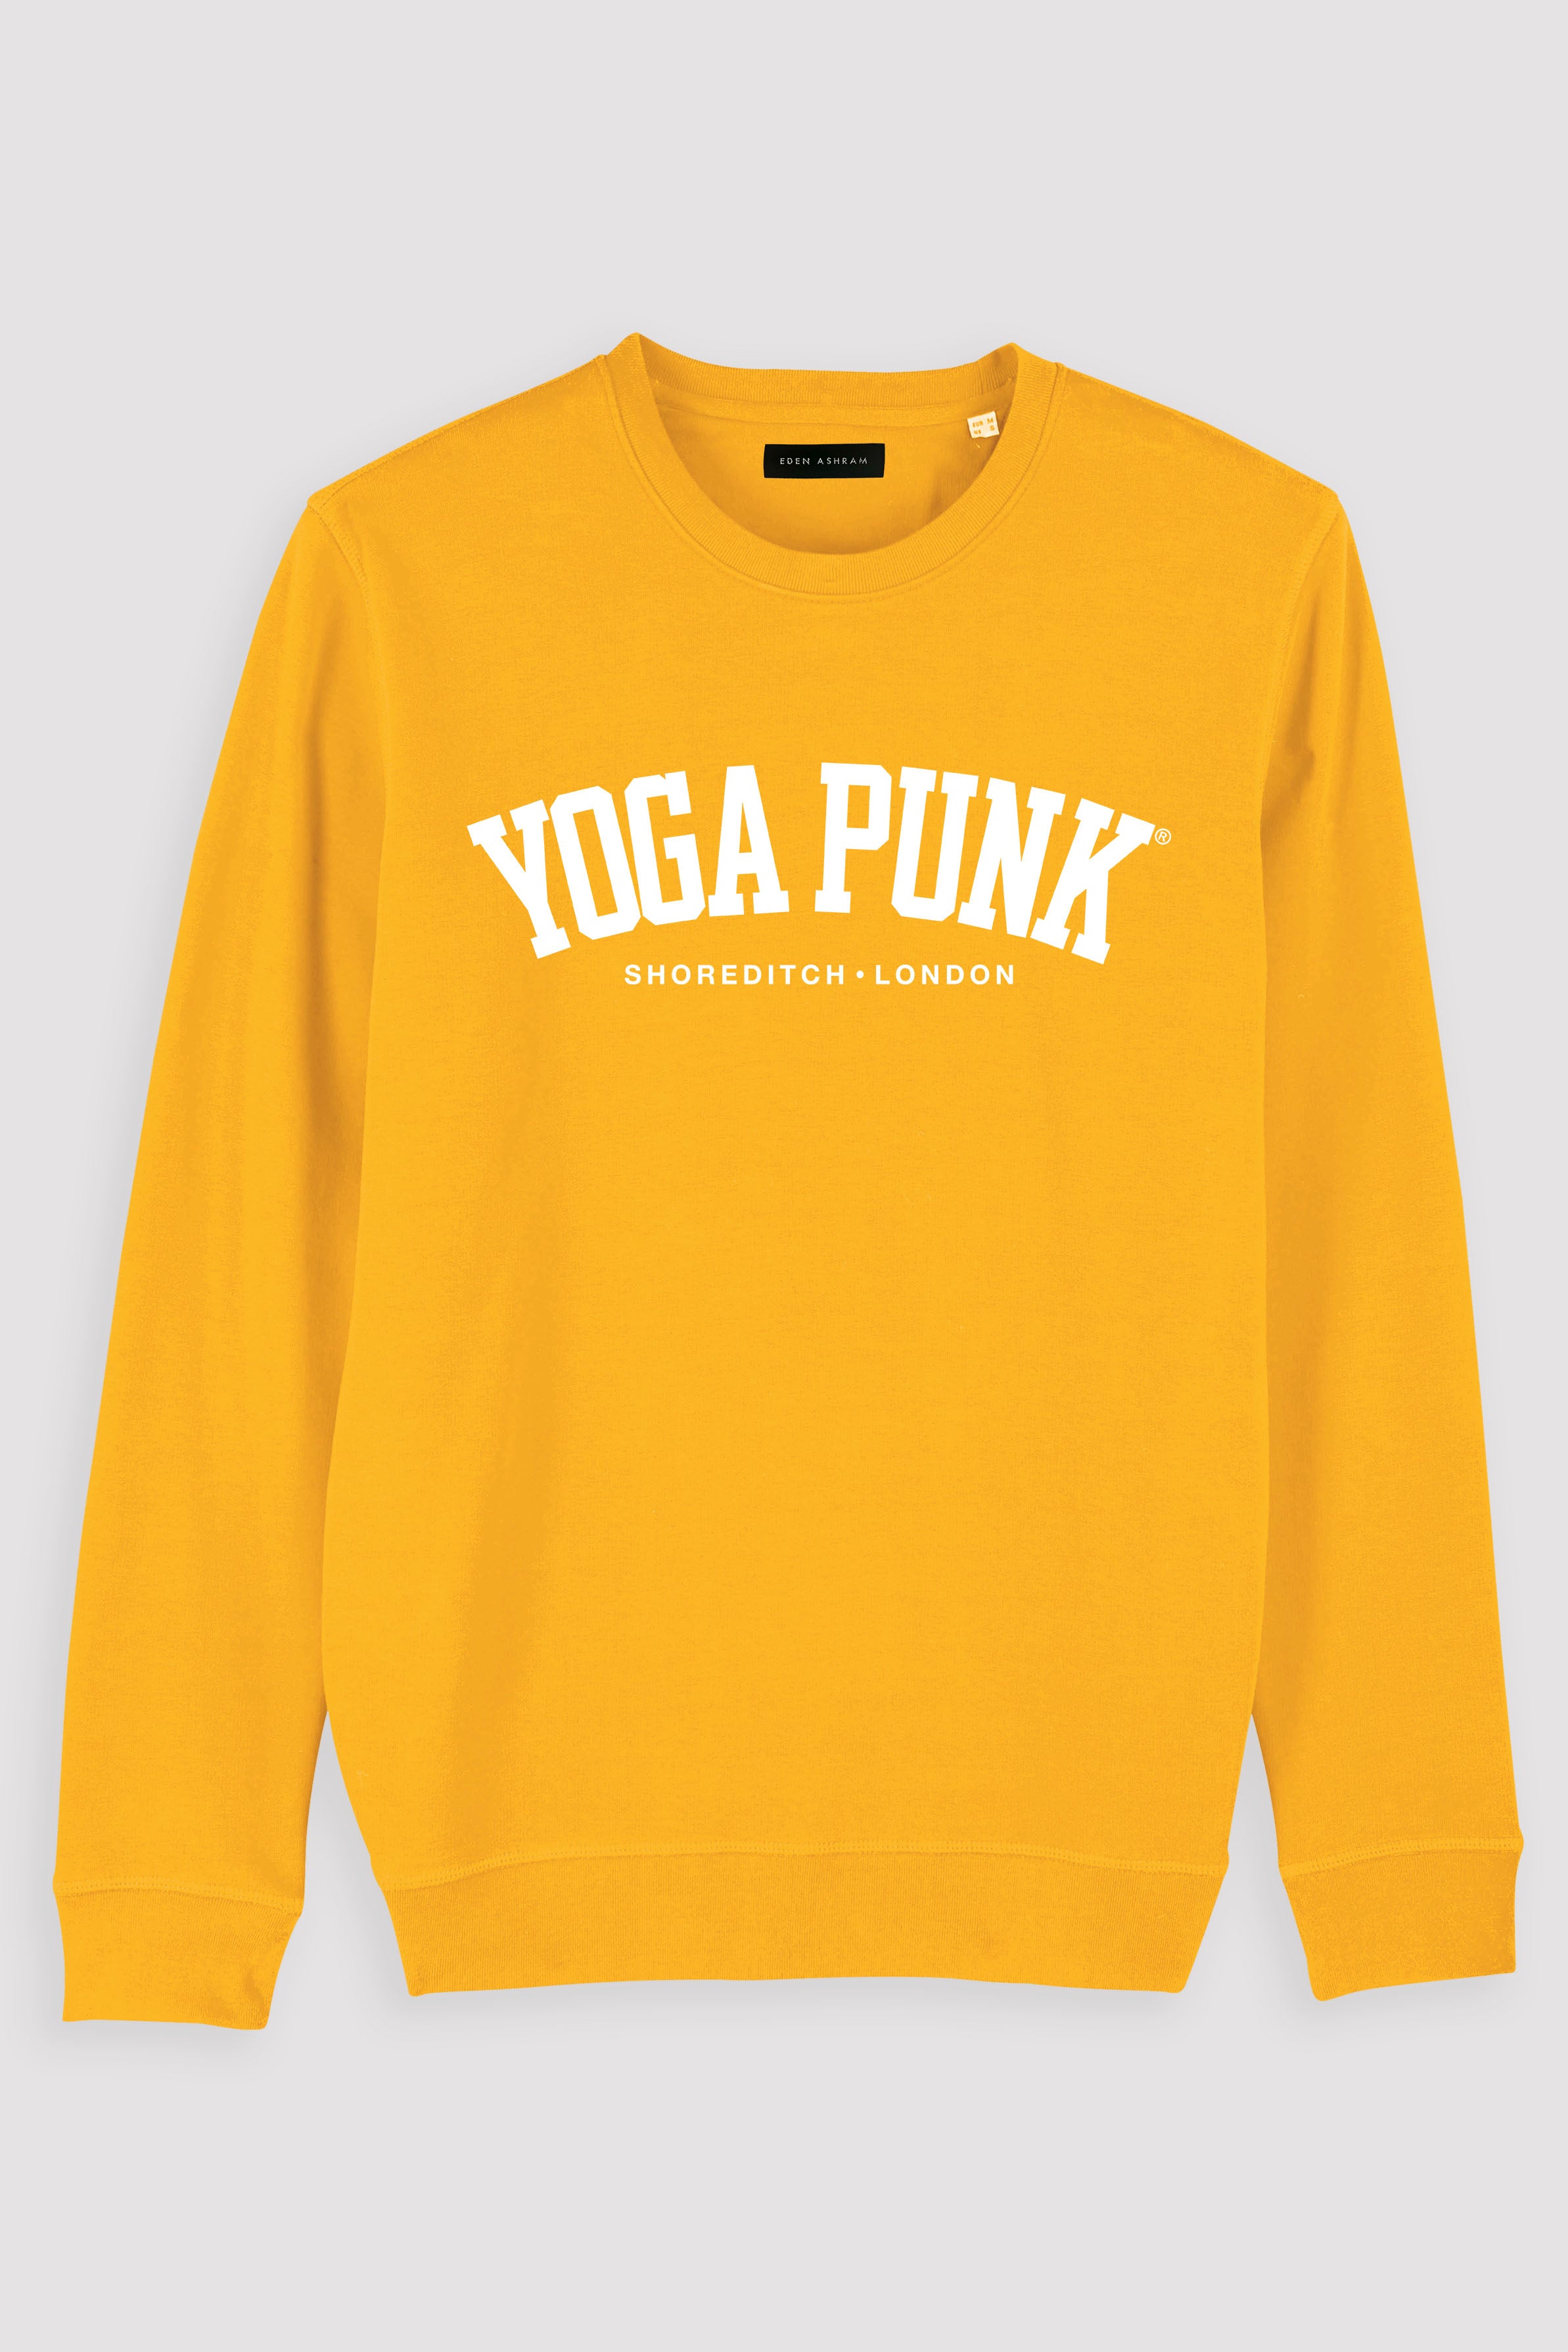 EDEN ASHRAM Yoga Punk Premium Crew Neck Sweatshirt Spectra Yellow